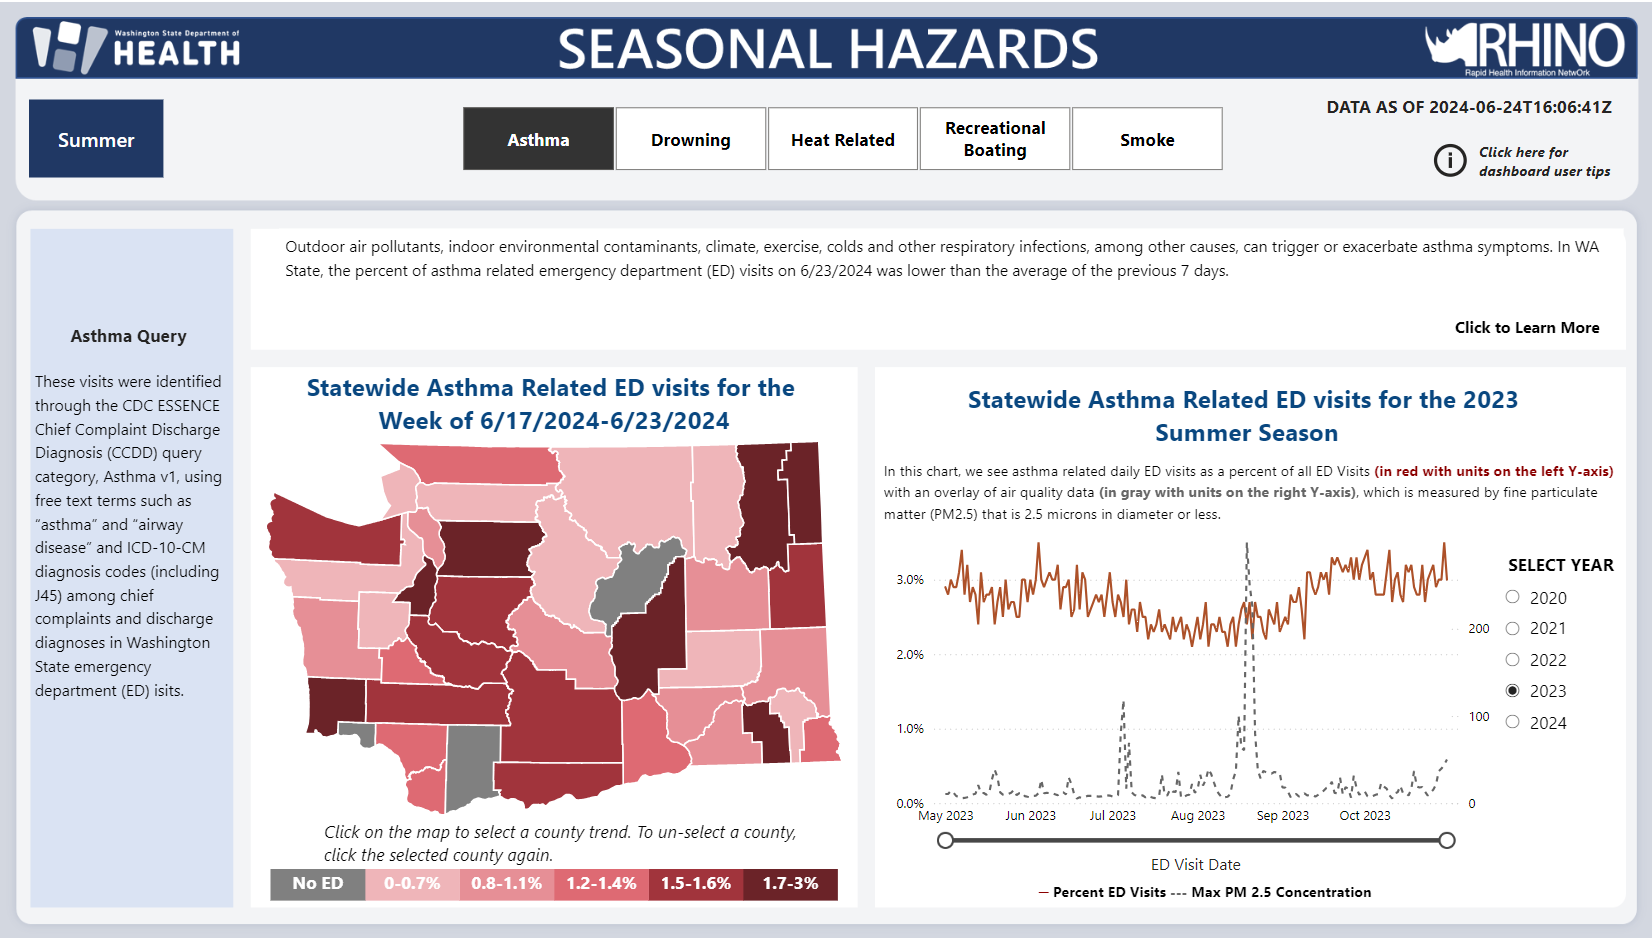 Image showing the Seasonal Hazards dashboard page